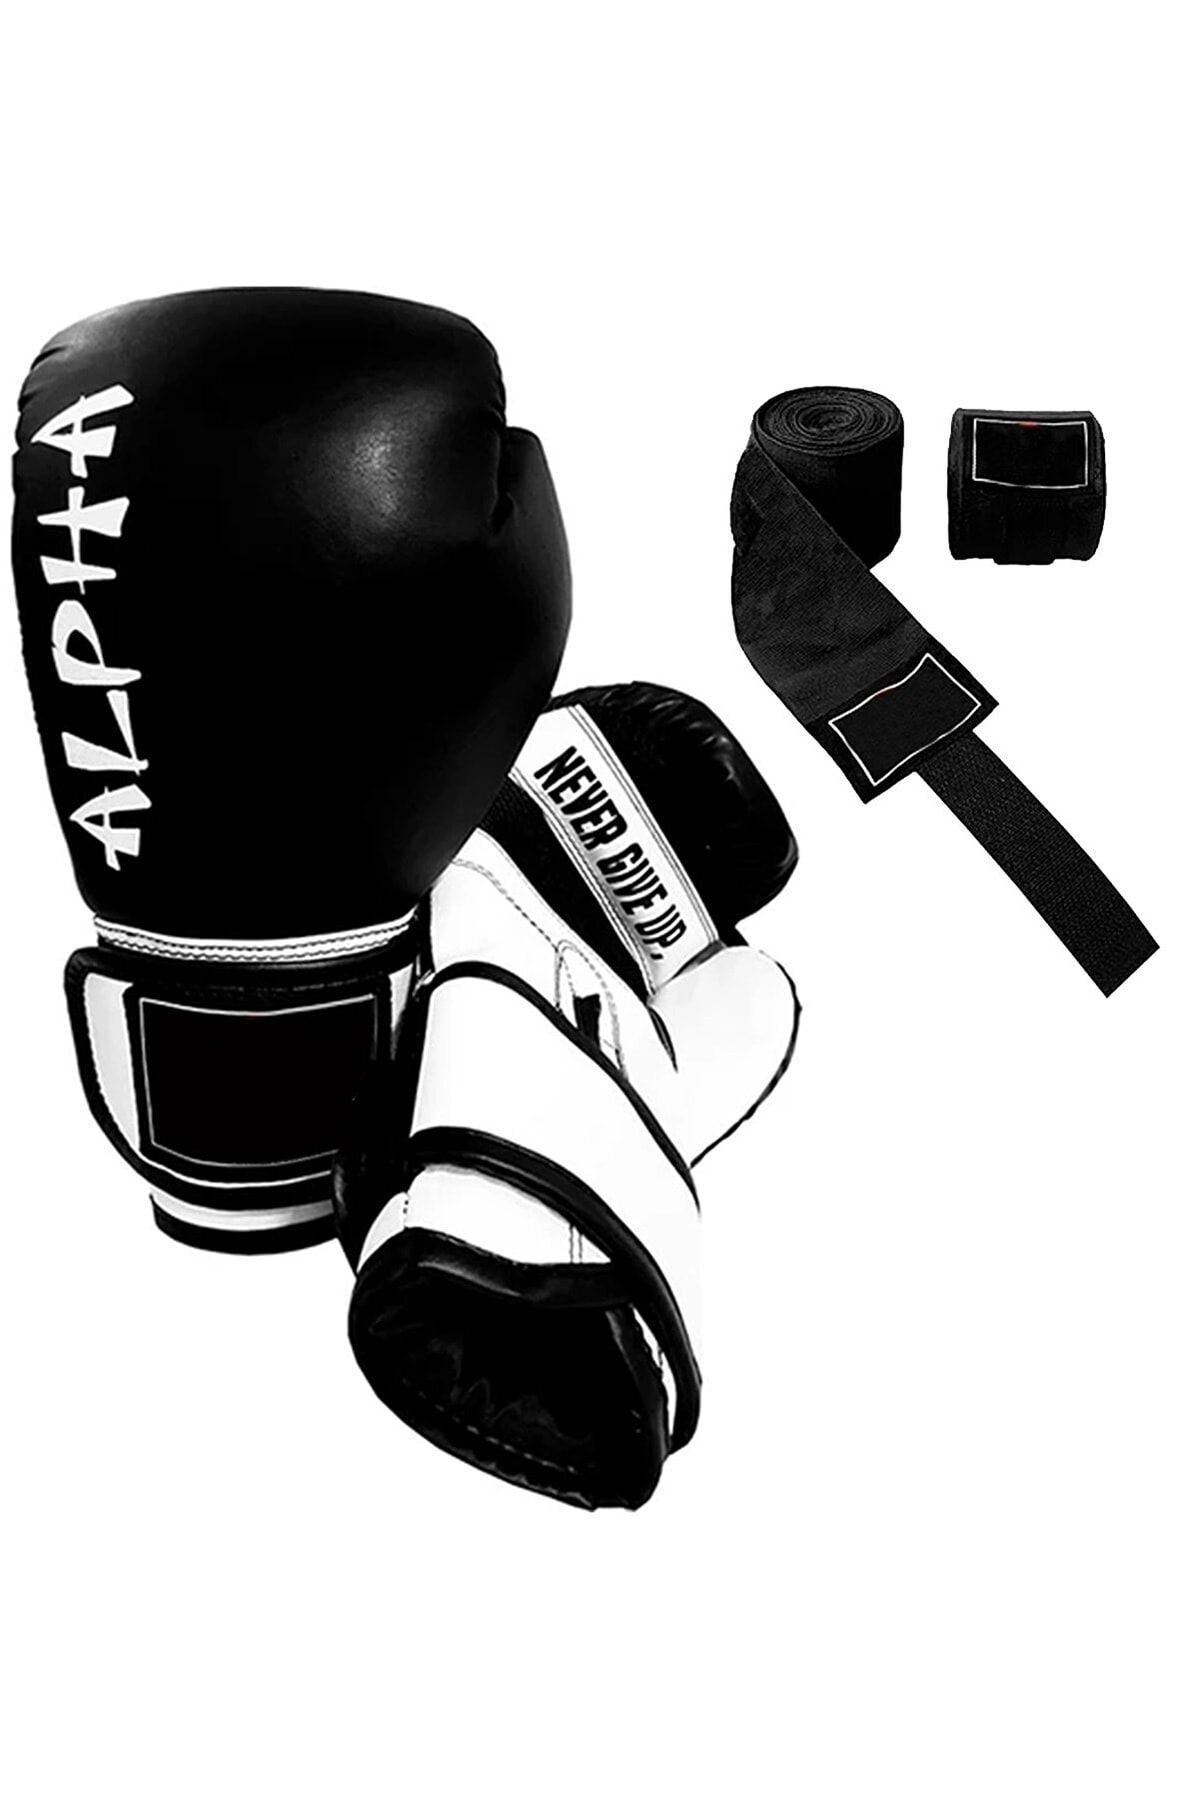 REDZEUS Alpha Boks Eldiveni Boks Bandajı 2'li Set Boxing Gloves Kick Boks Eldiven Seti Bandaj Takımı